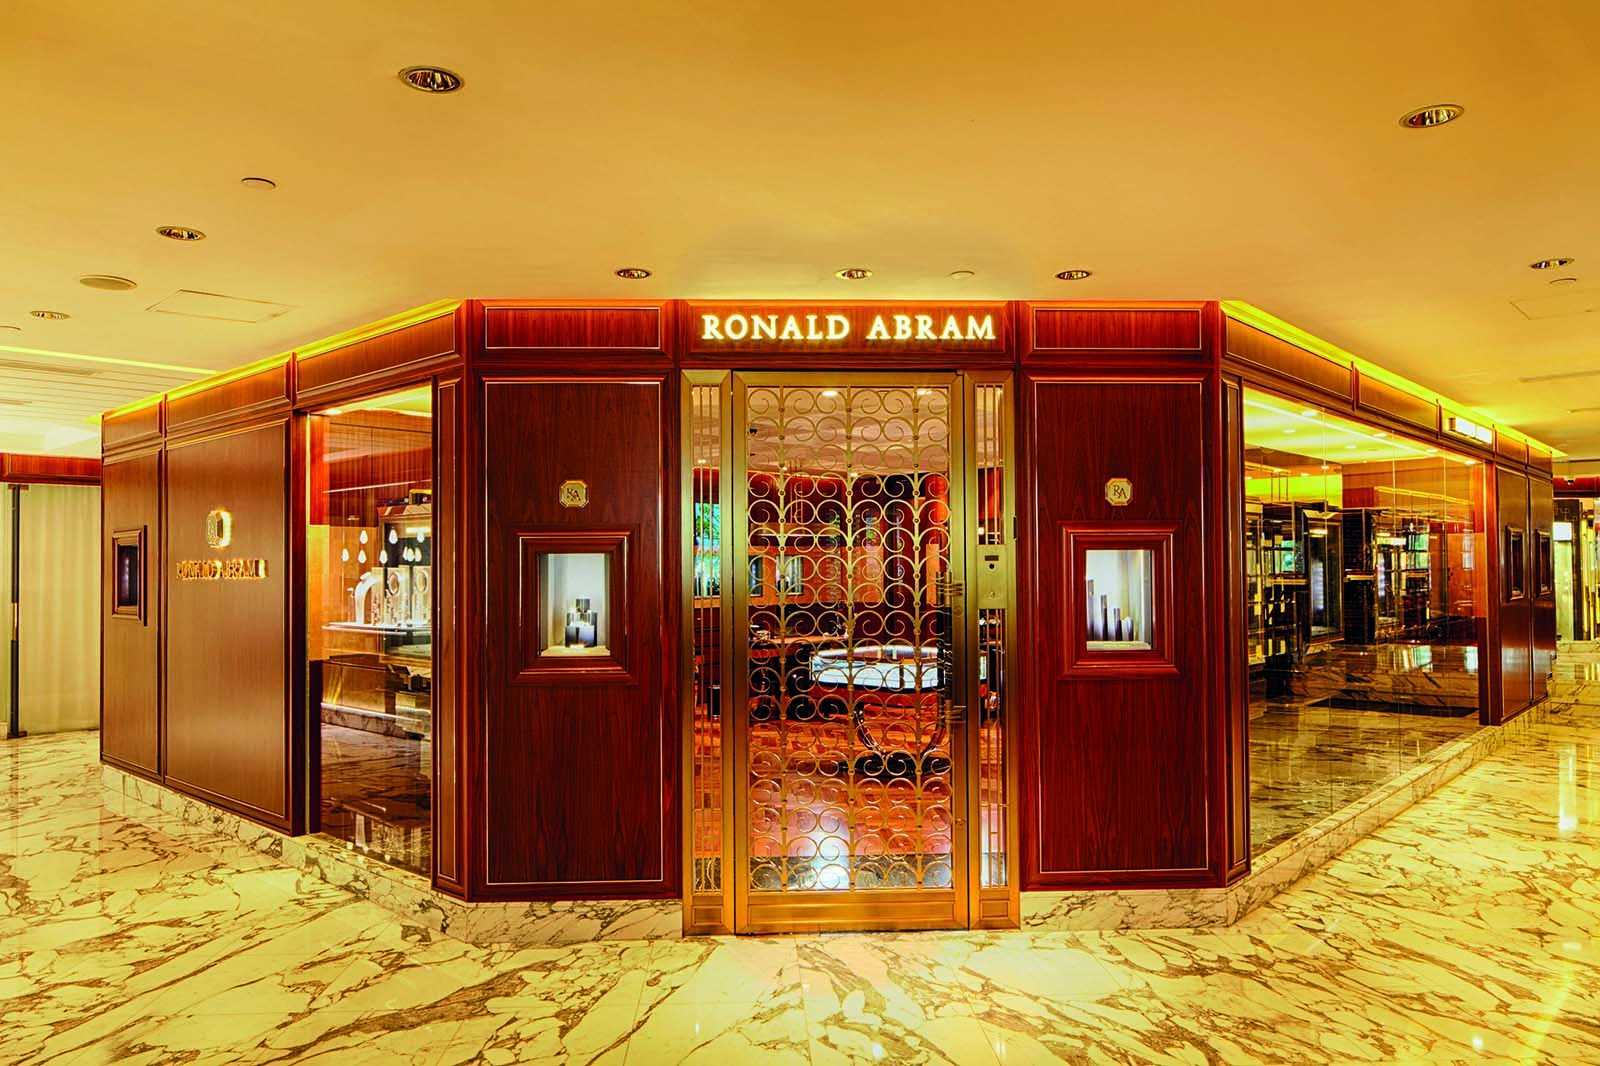 The Ronald Abram salon at The Mandarin Oriental in Hong Kong